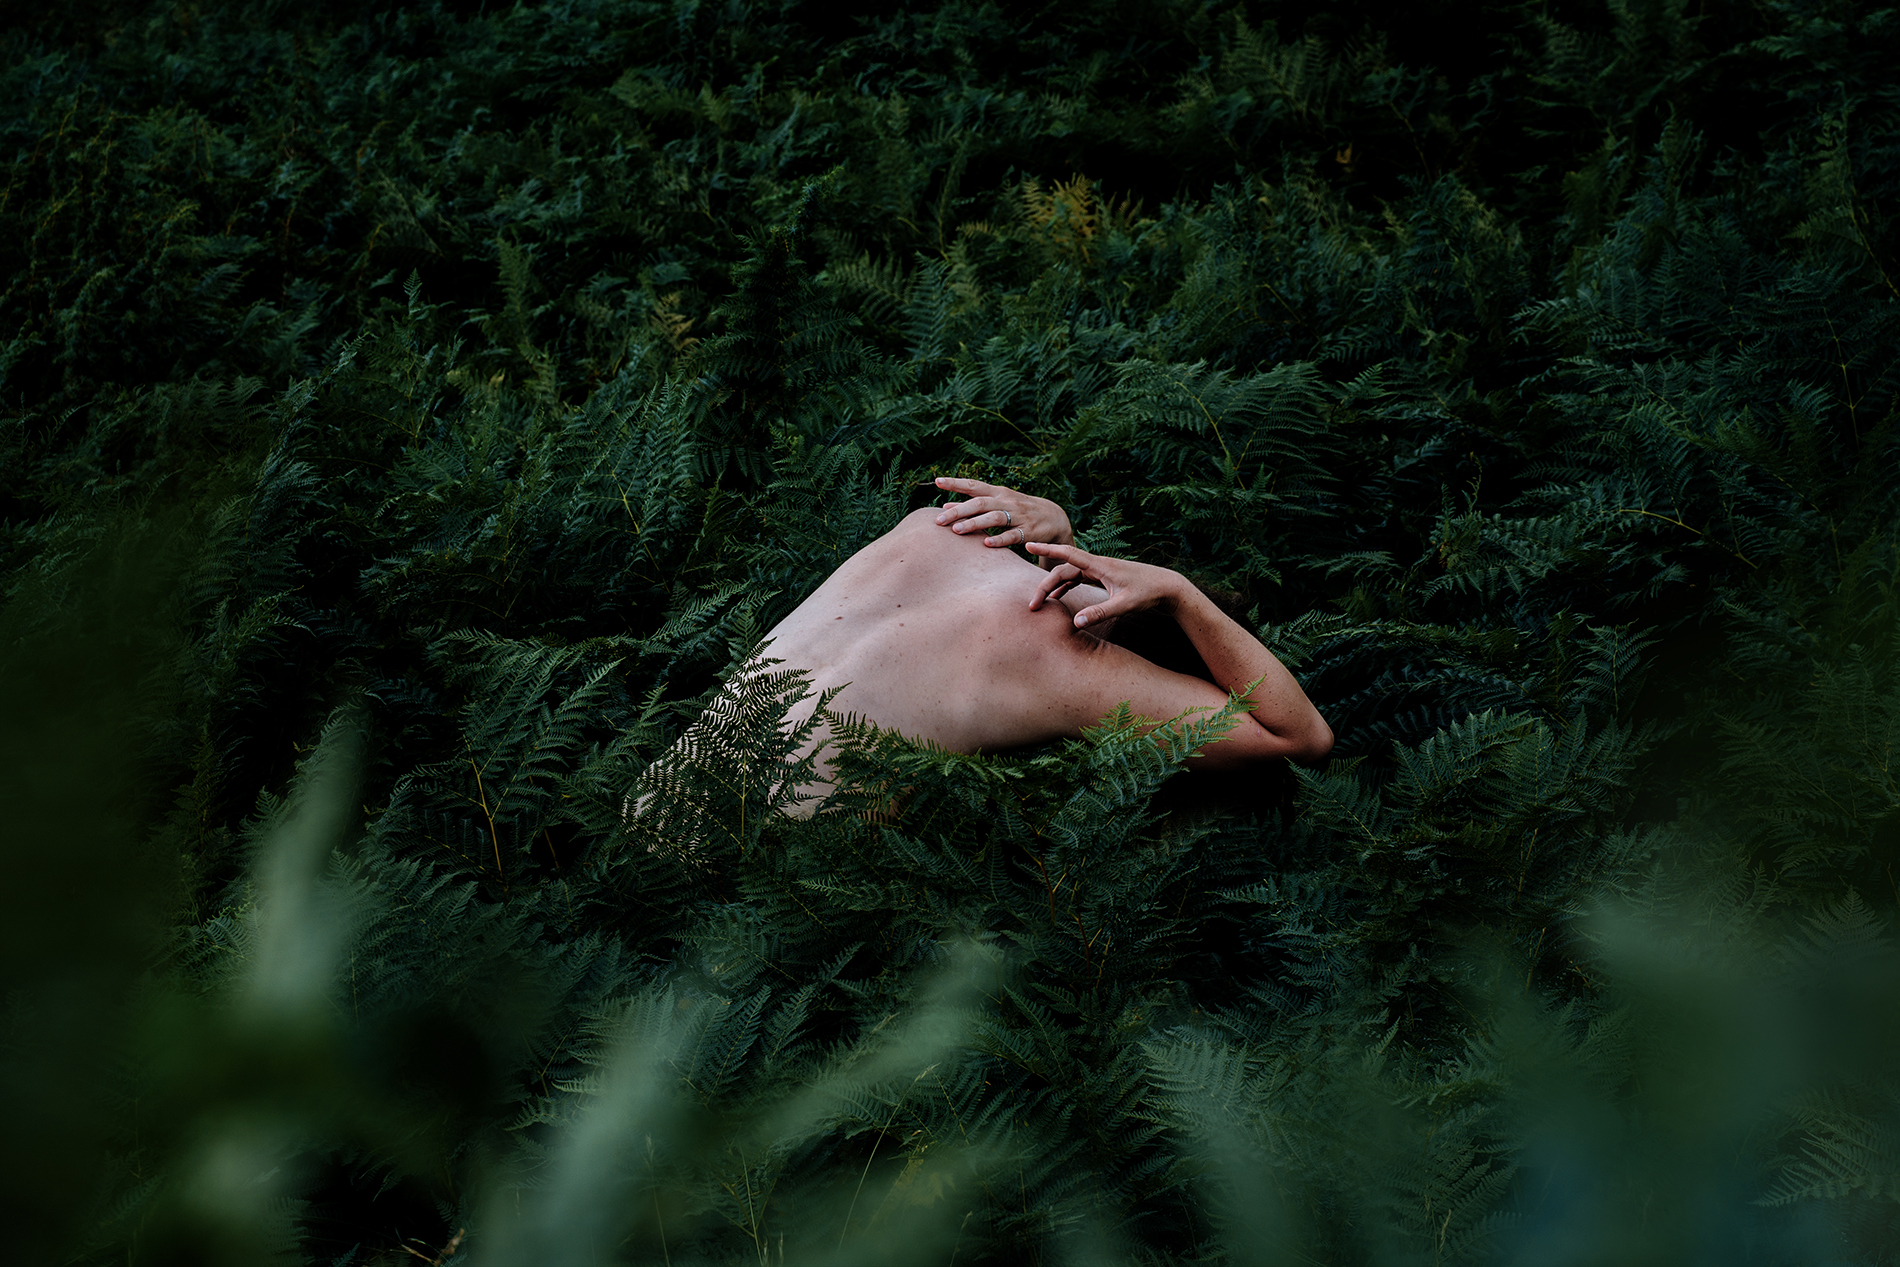 Emotional nude fine art photography by Anna Heimkreiter. A woman's bare back inbetween green ferns.